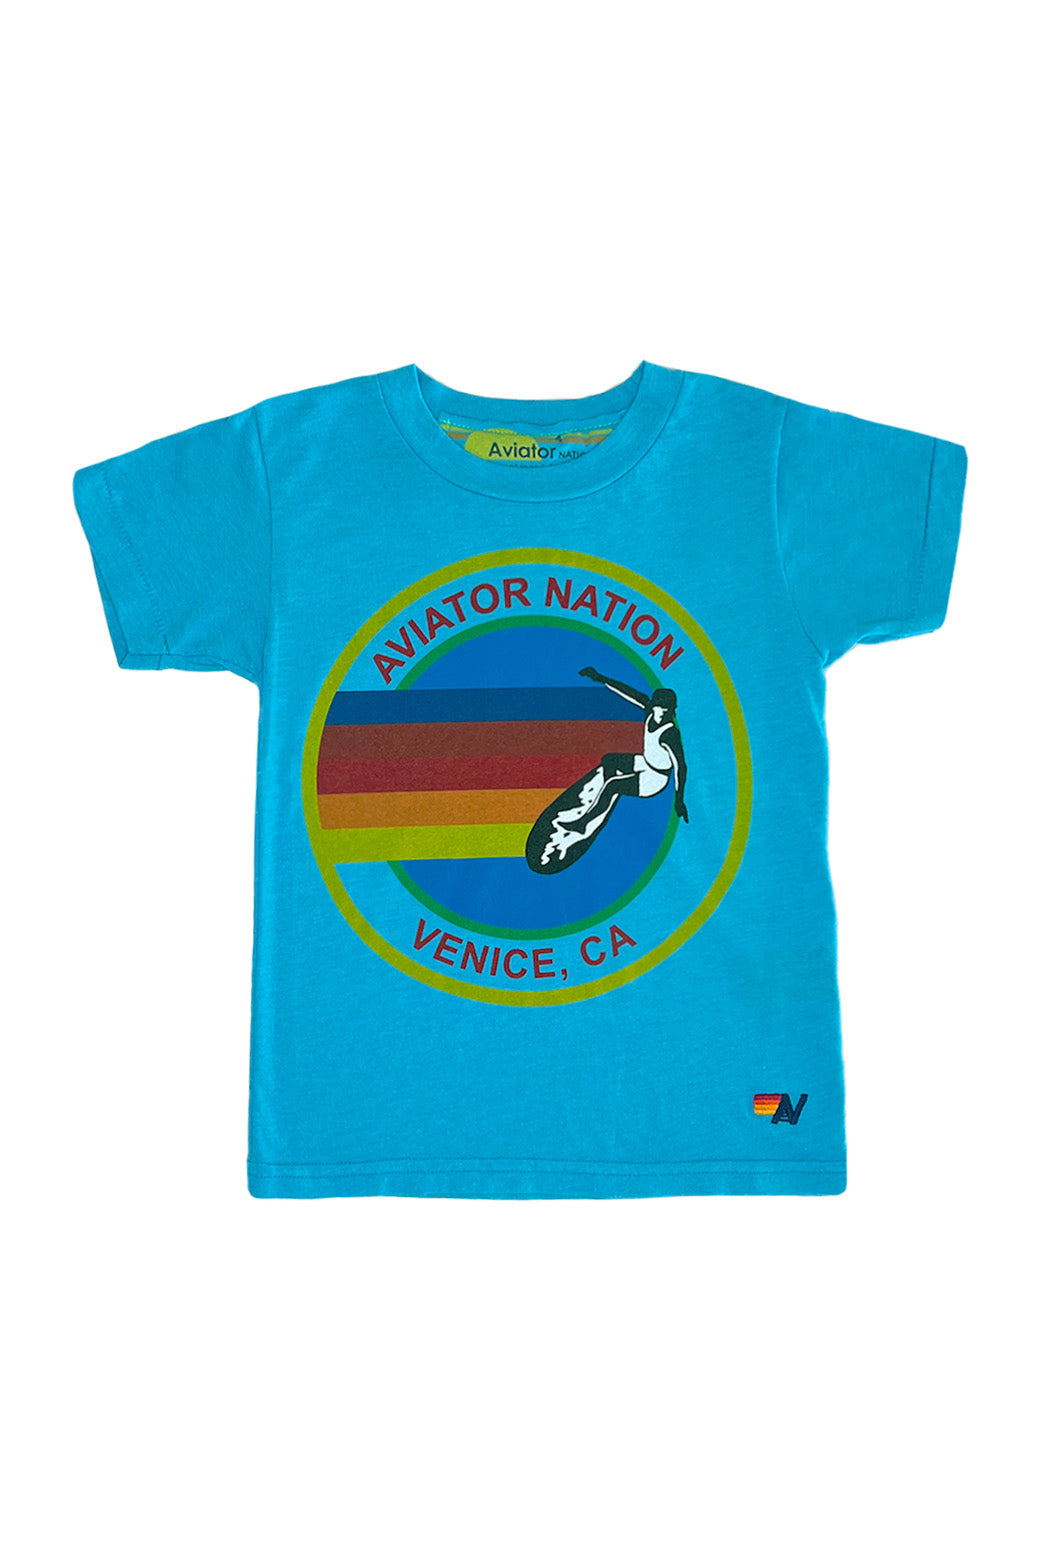 Copy of KID'S AVIATOR NATION TEE - NEON BLUE Kid's Tee Aviator Nation 